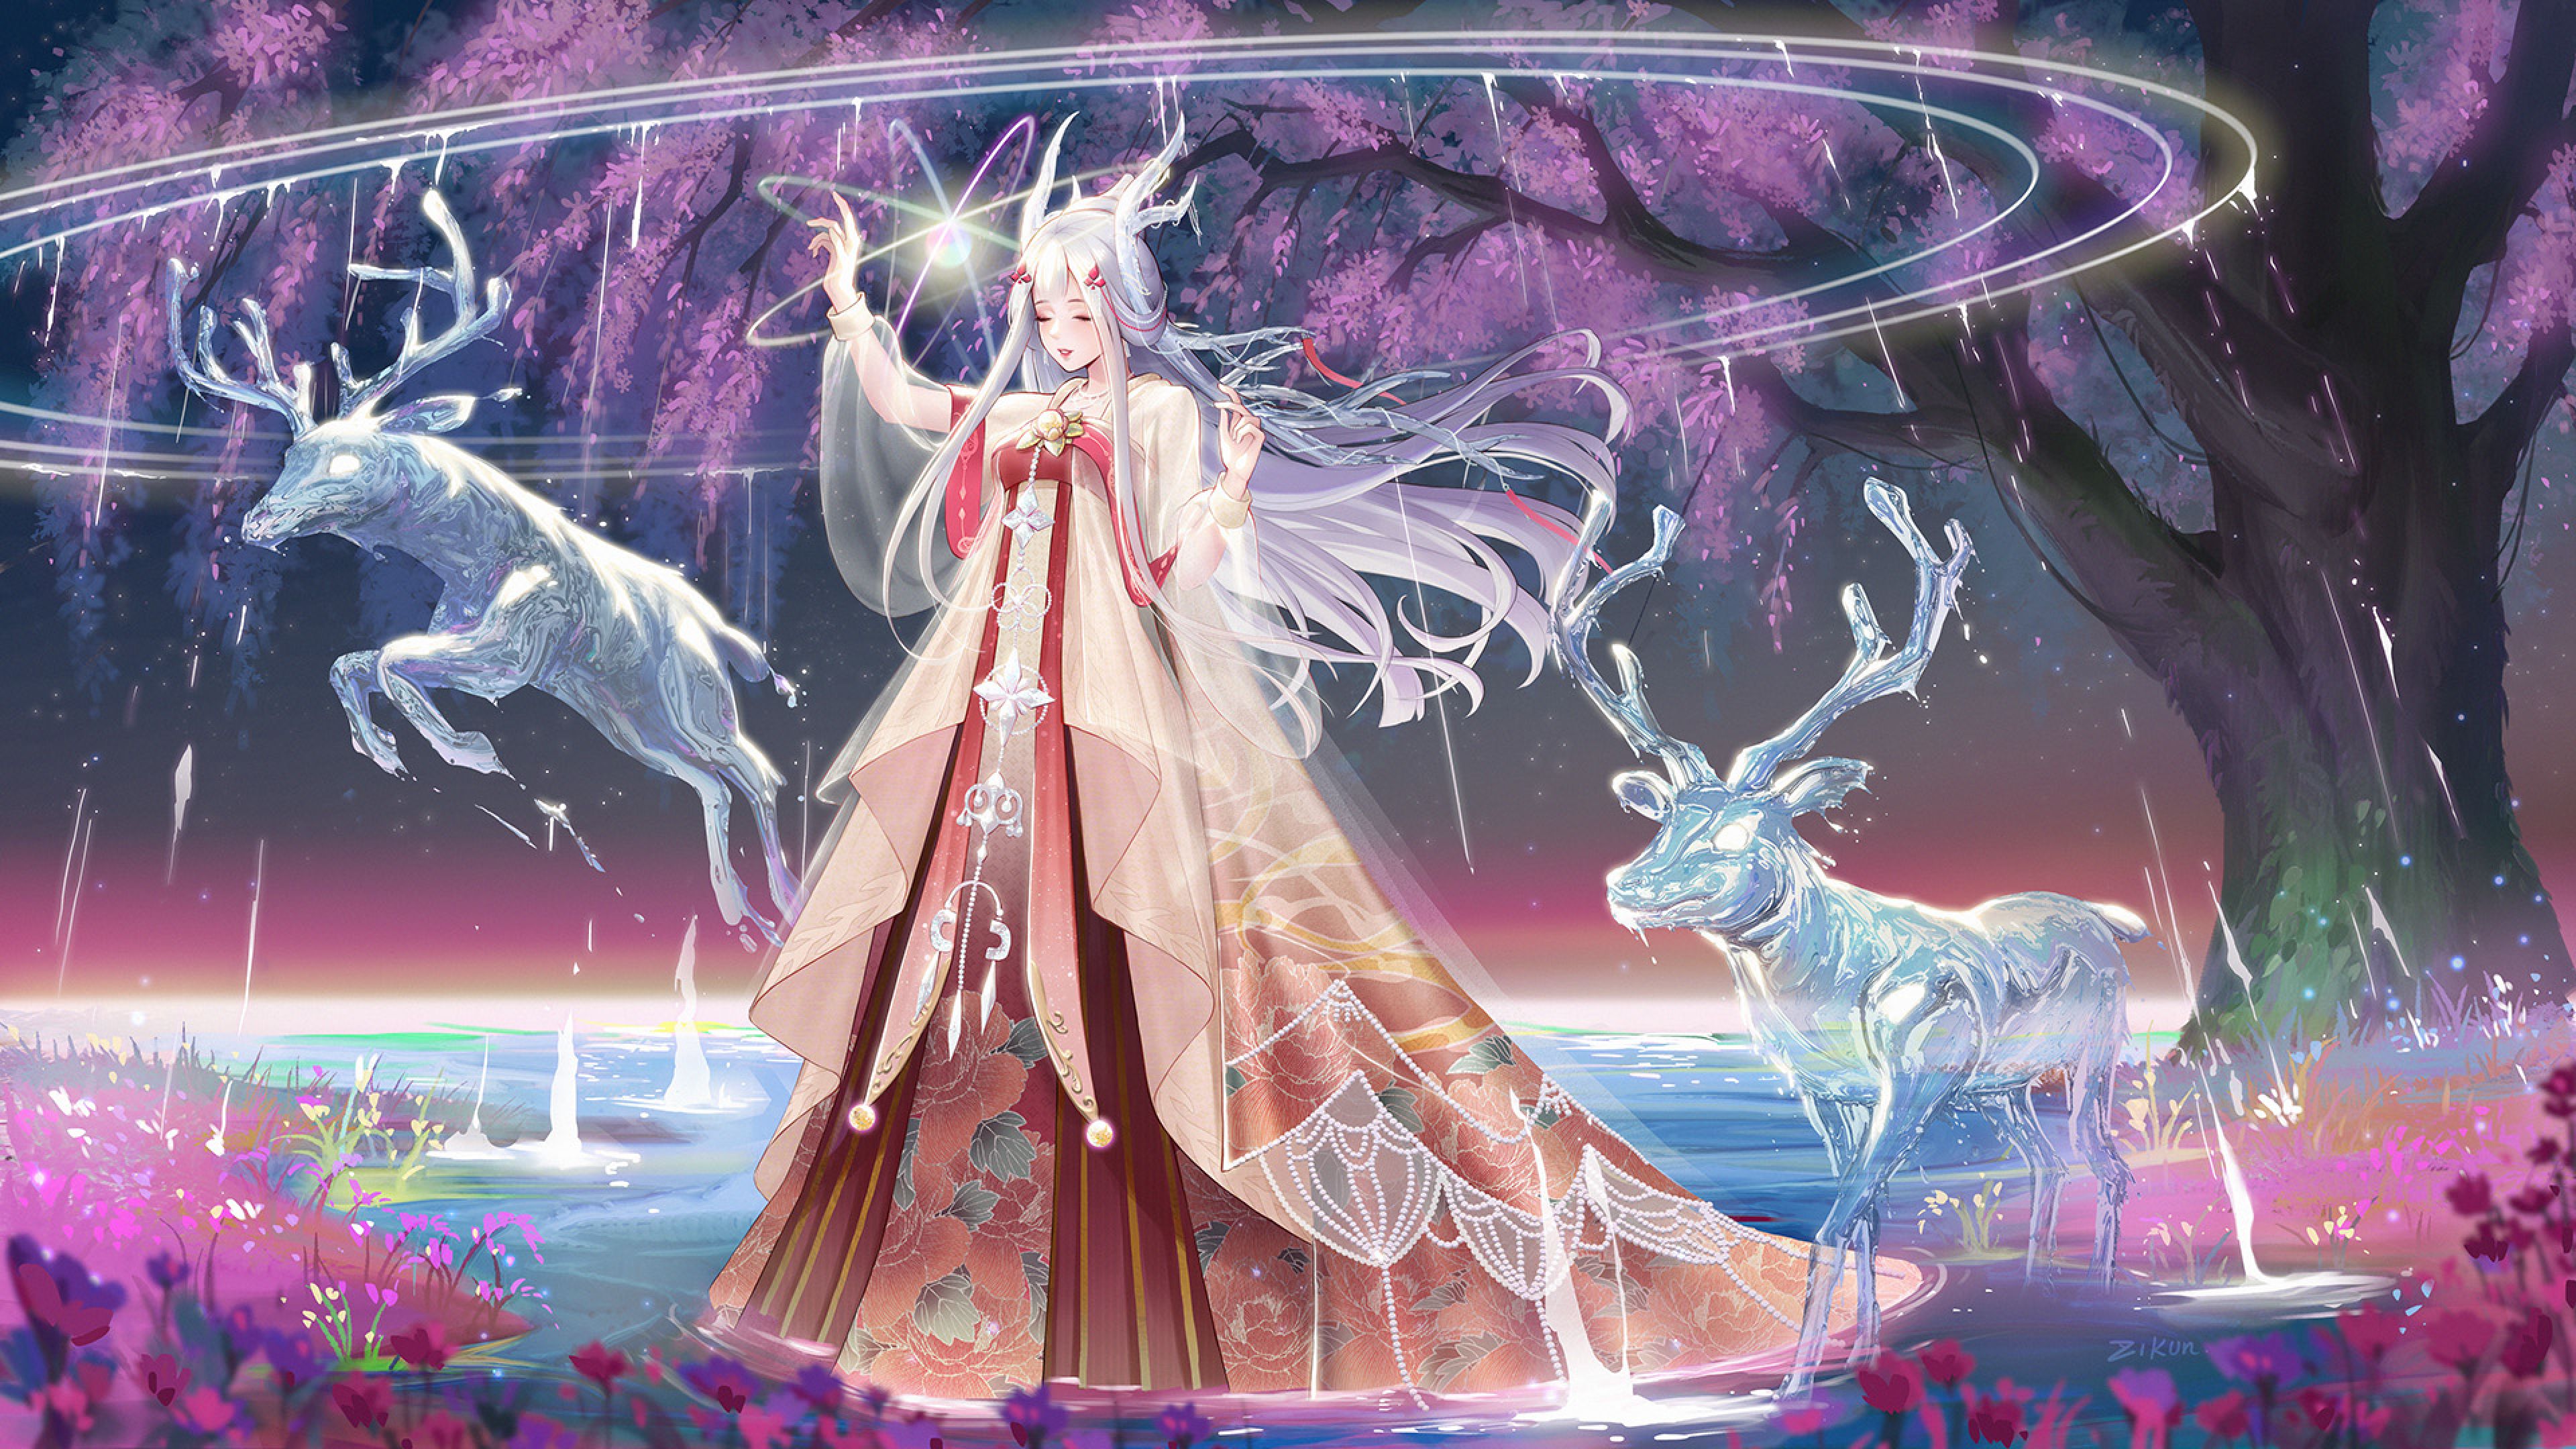 Anime Angel Girl 4K Wallpaper, HD Fantasy 4K Wallpaper, Image, Photo and Background